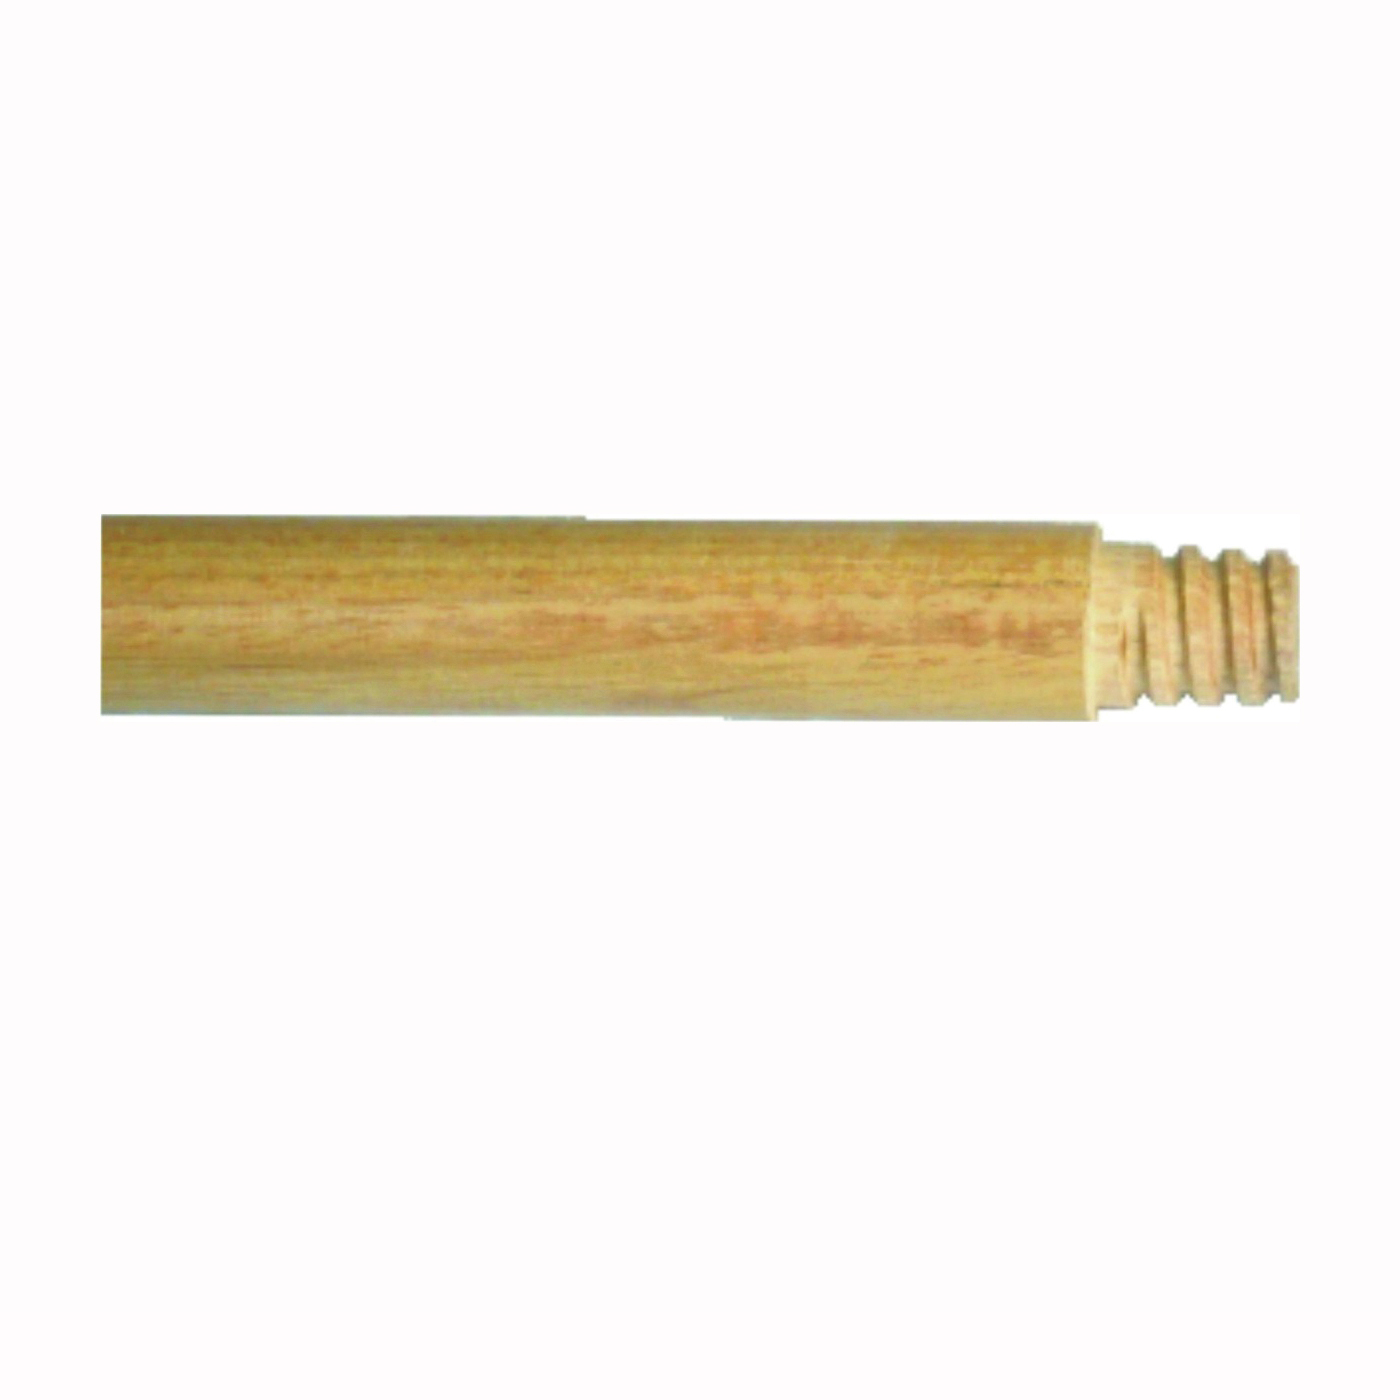 BIRDWELL 533-12 Broom Handle, 15/16 in Dia, 60 in L, Threaded, Hardwood - 1